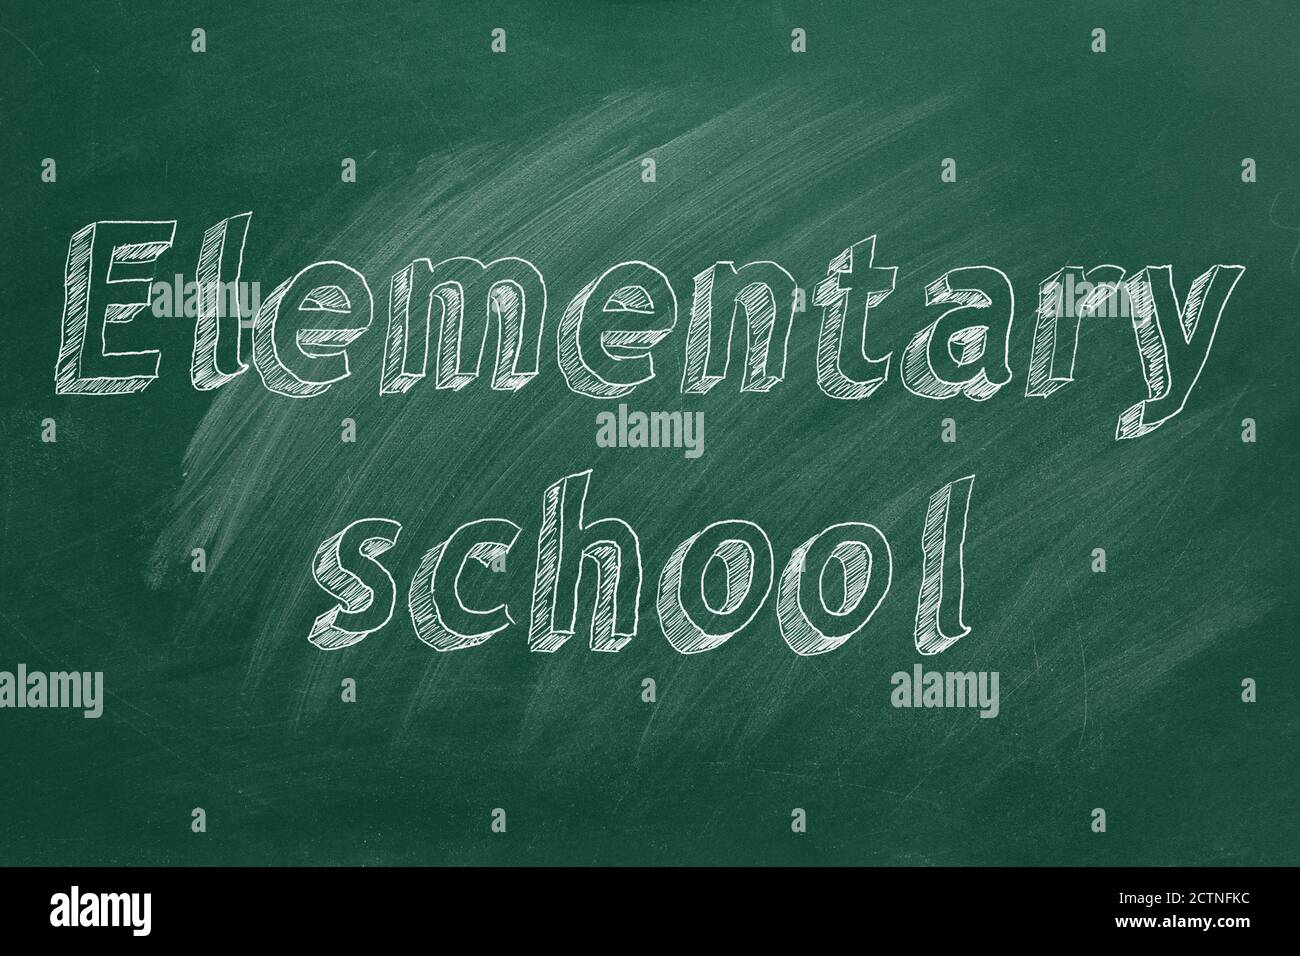 Hand drawing 'Elementary school' on green chalkboard Stock Photo